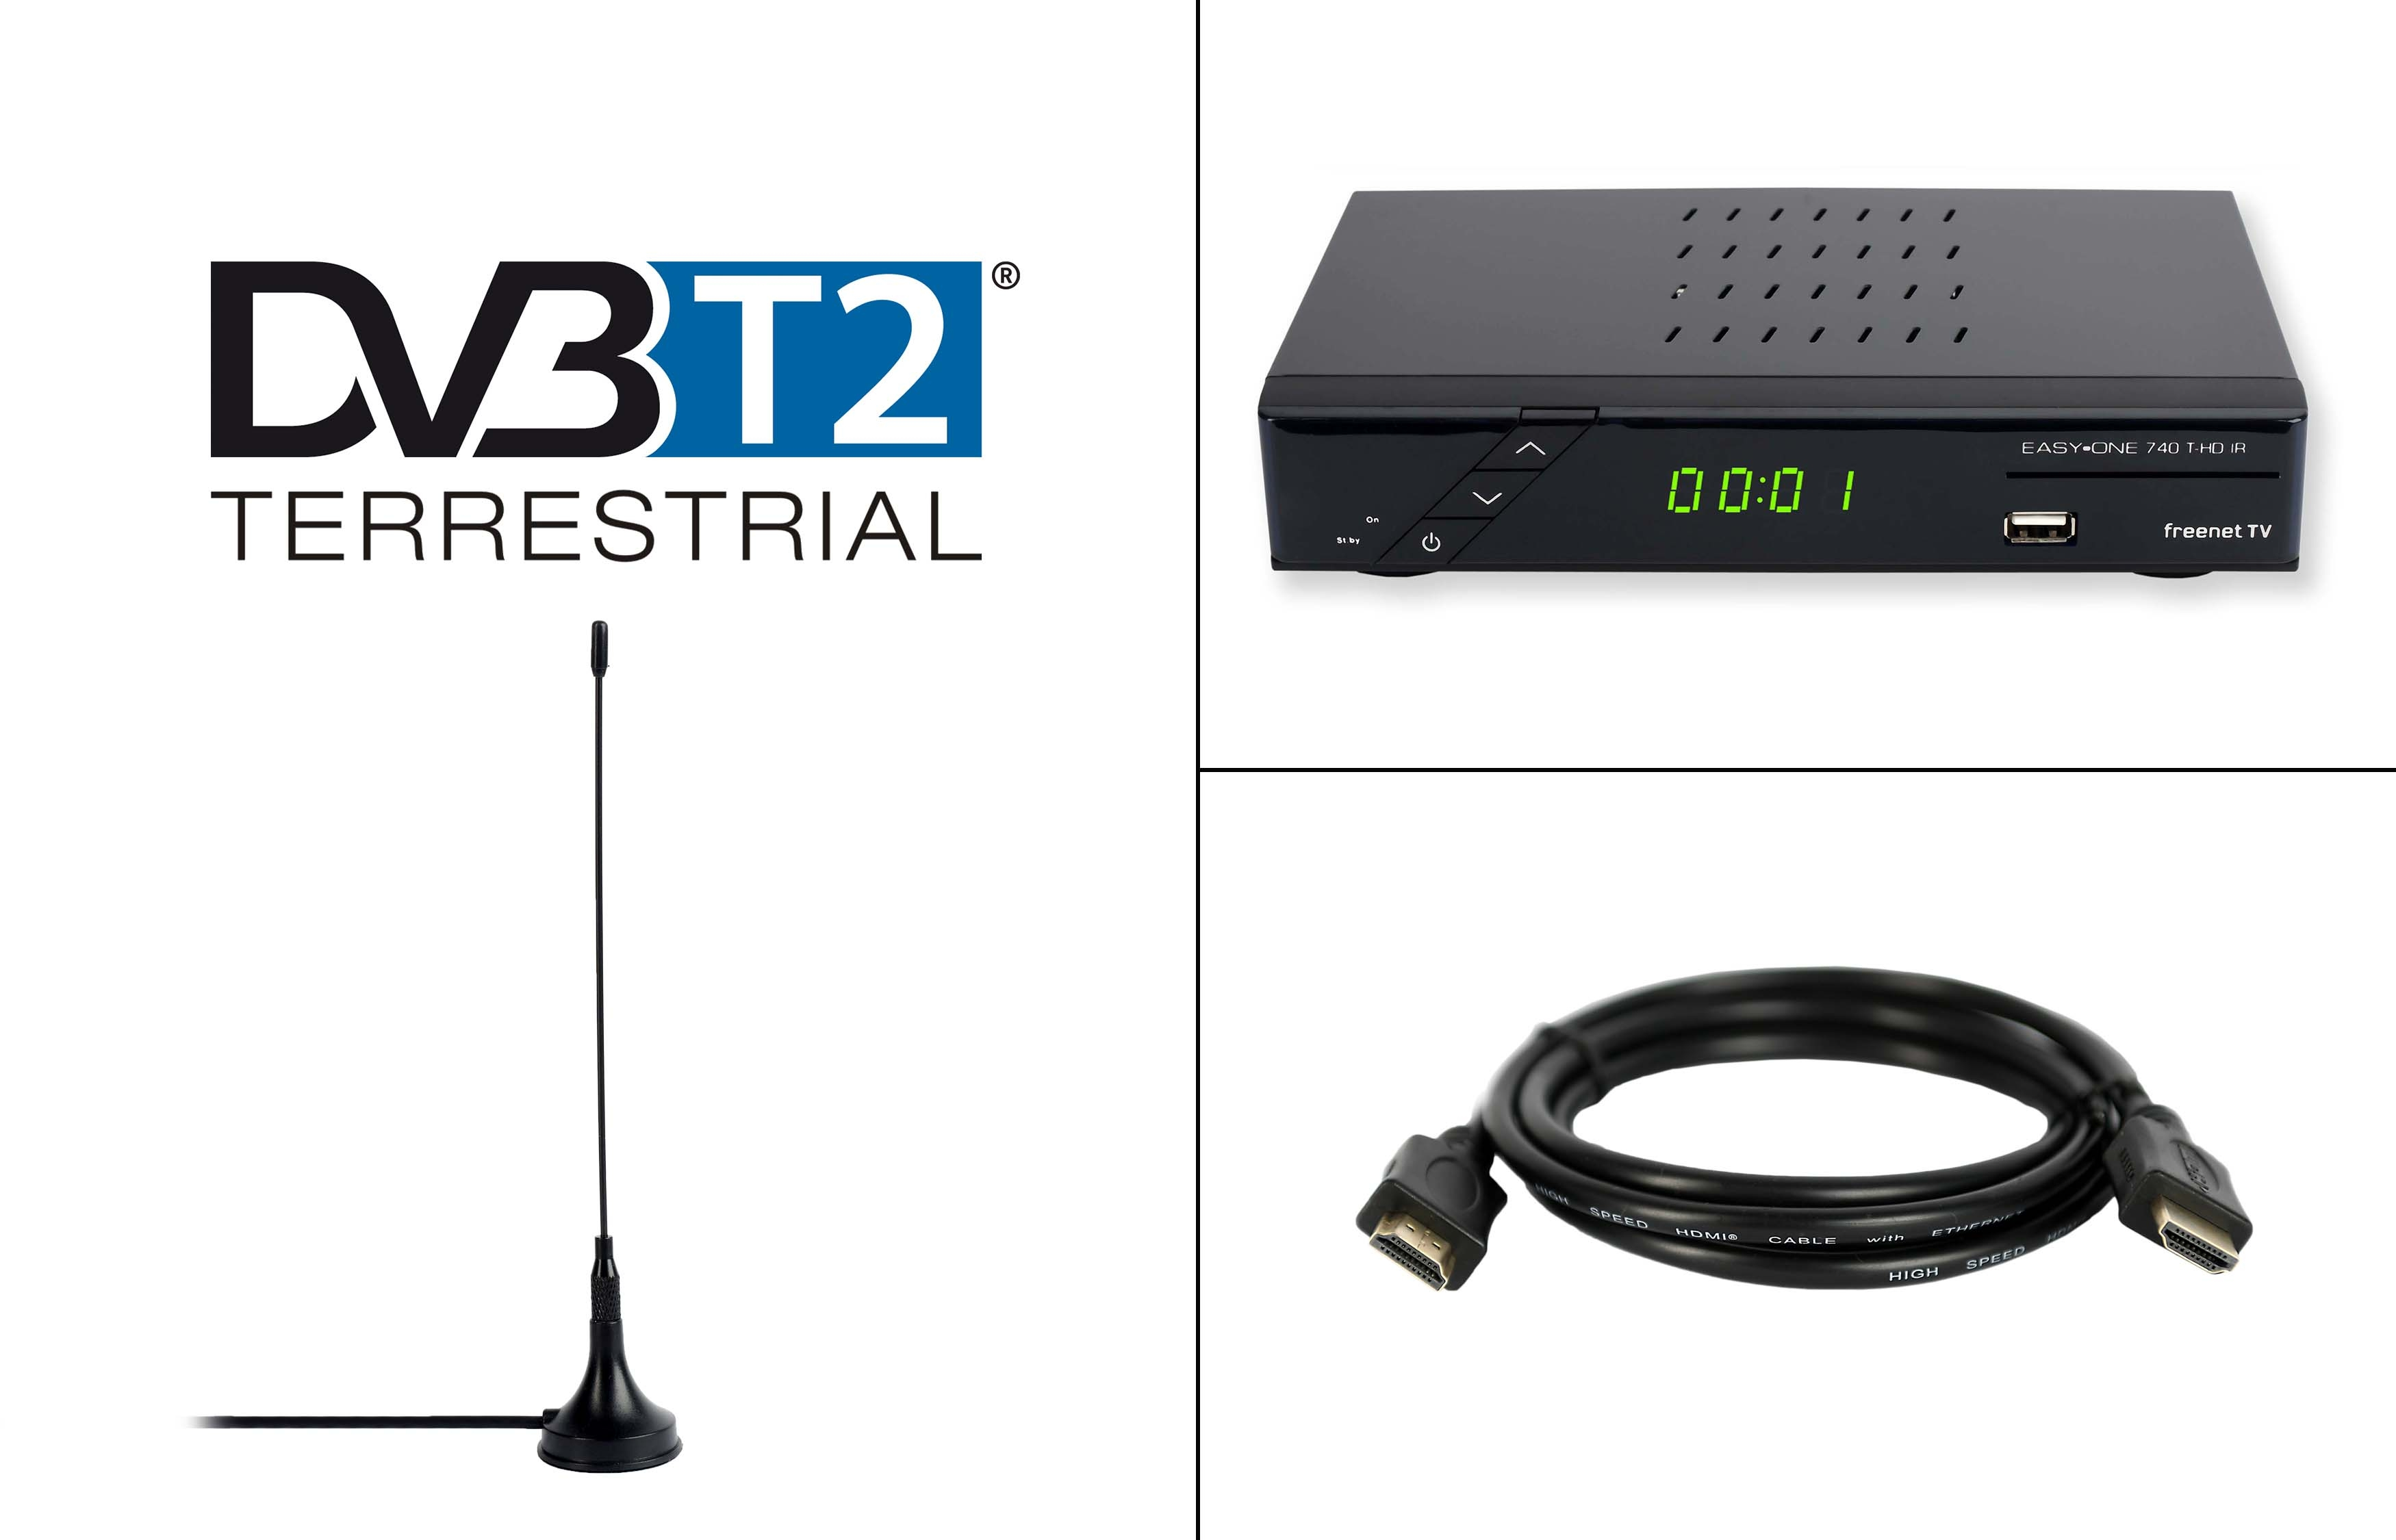 SET-ONE 740 HD Home Bundel DVB-T2 (H.264), PVR-Funktion, DVB-T, (H.265), DVB-T2 DVB-T-Receiver schwarz) (HDTV